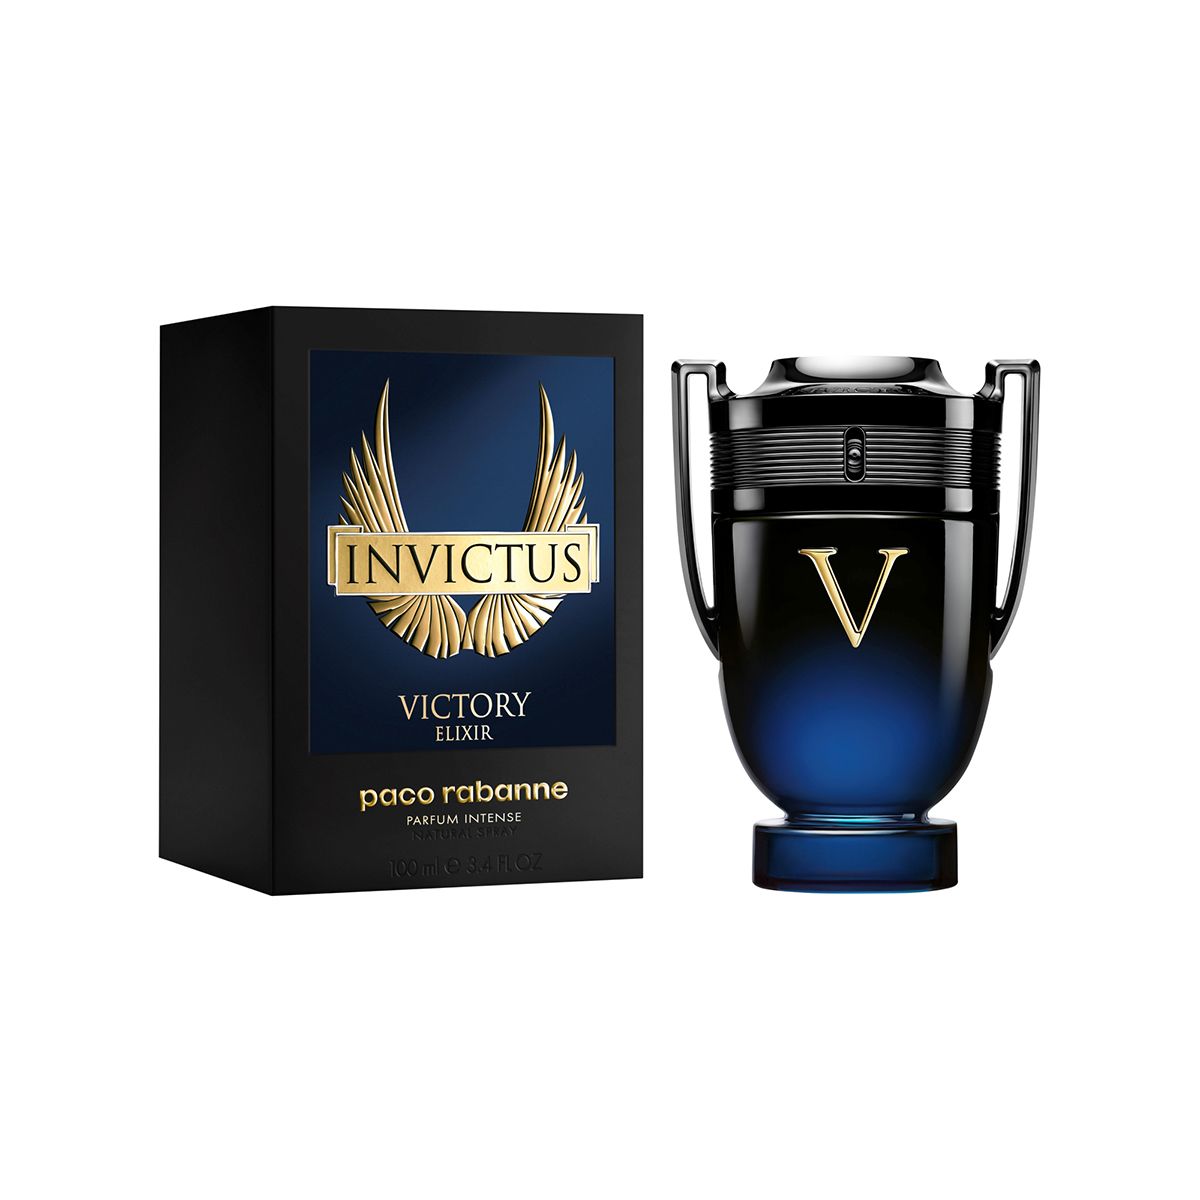 Rabanne Invictus Victory Elixir Parfum Intense